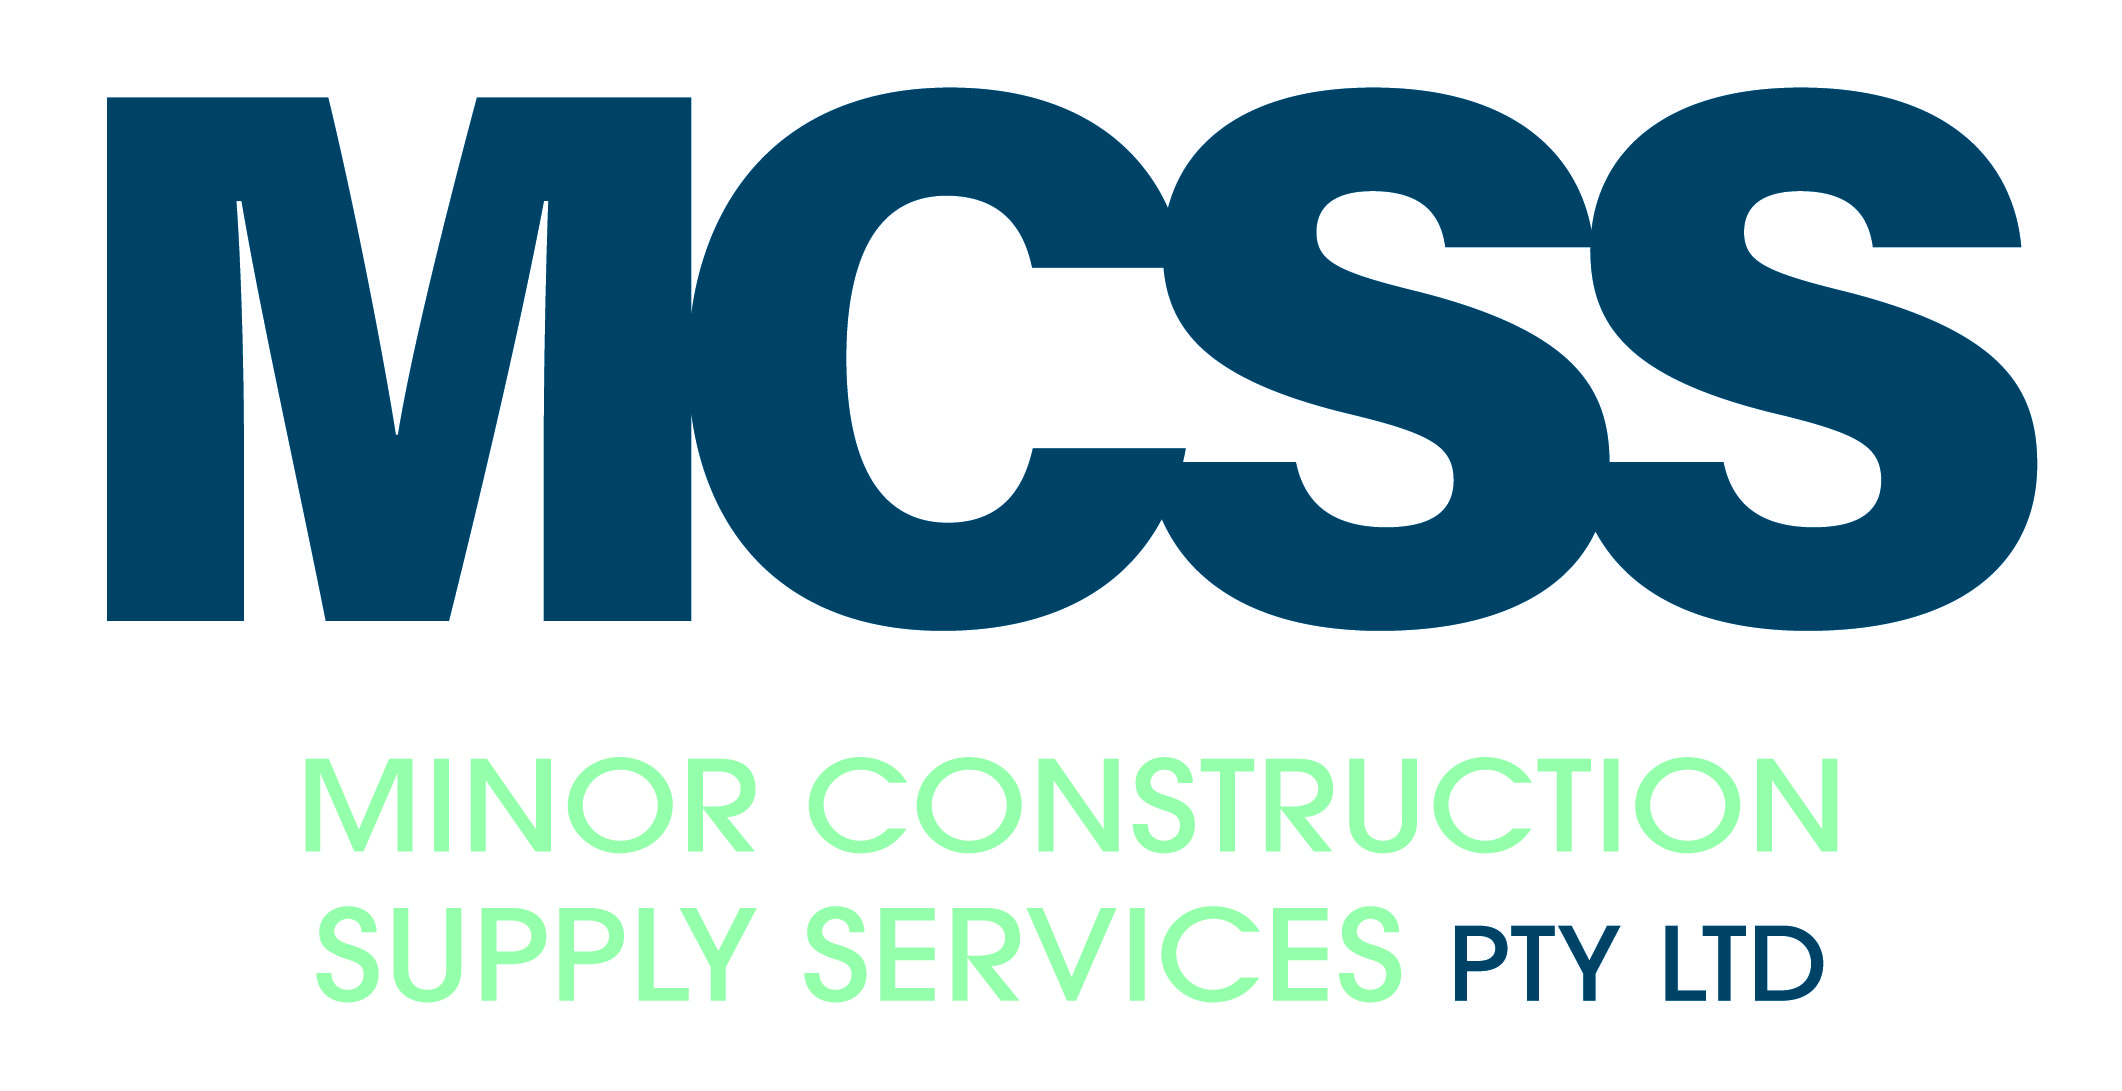 Minor Construction Supply Services